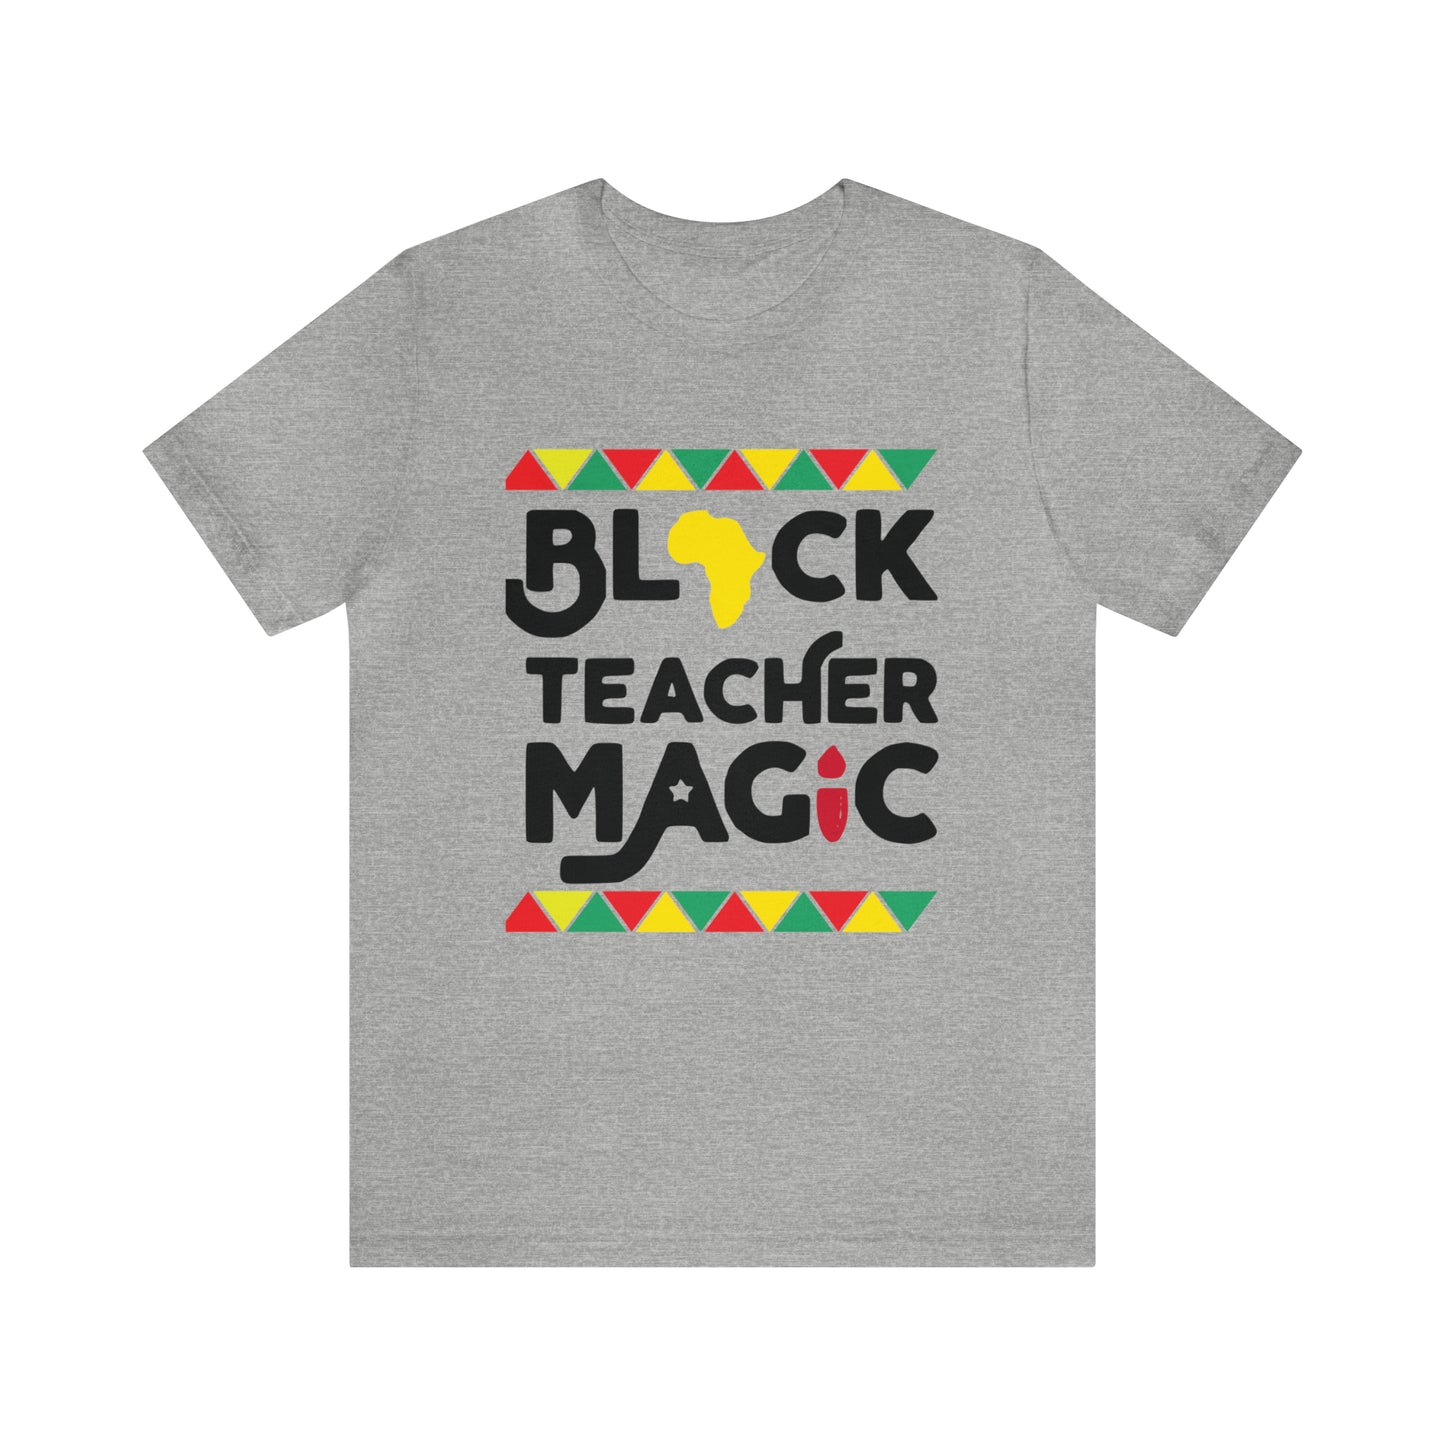 Black Teacher Magic with a small Africa tee